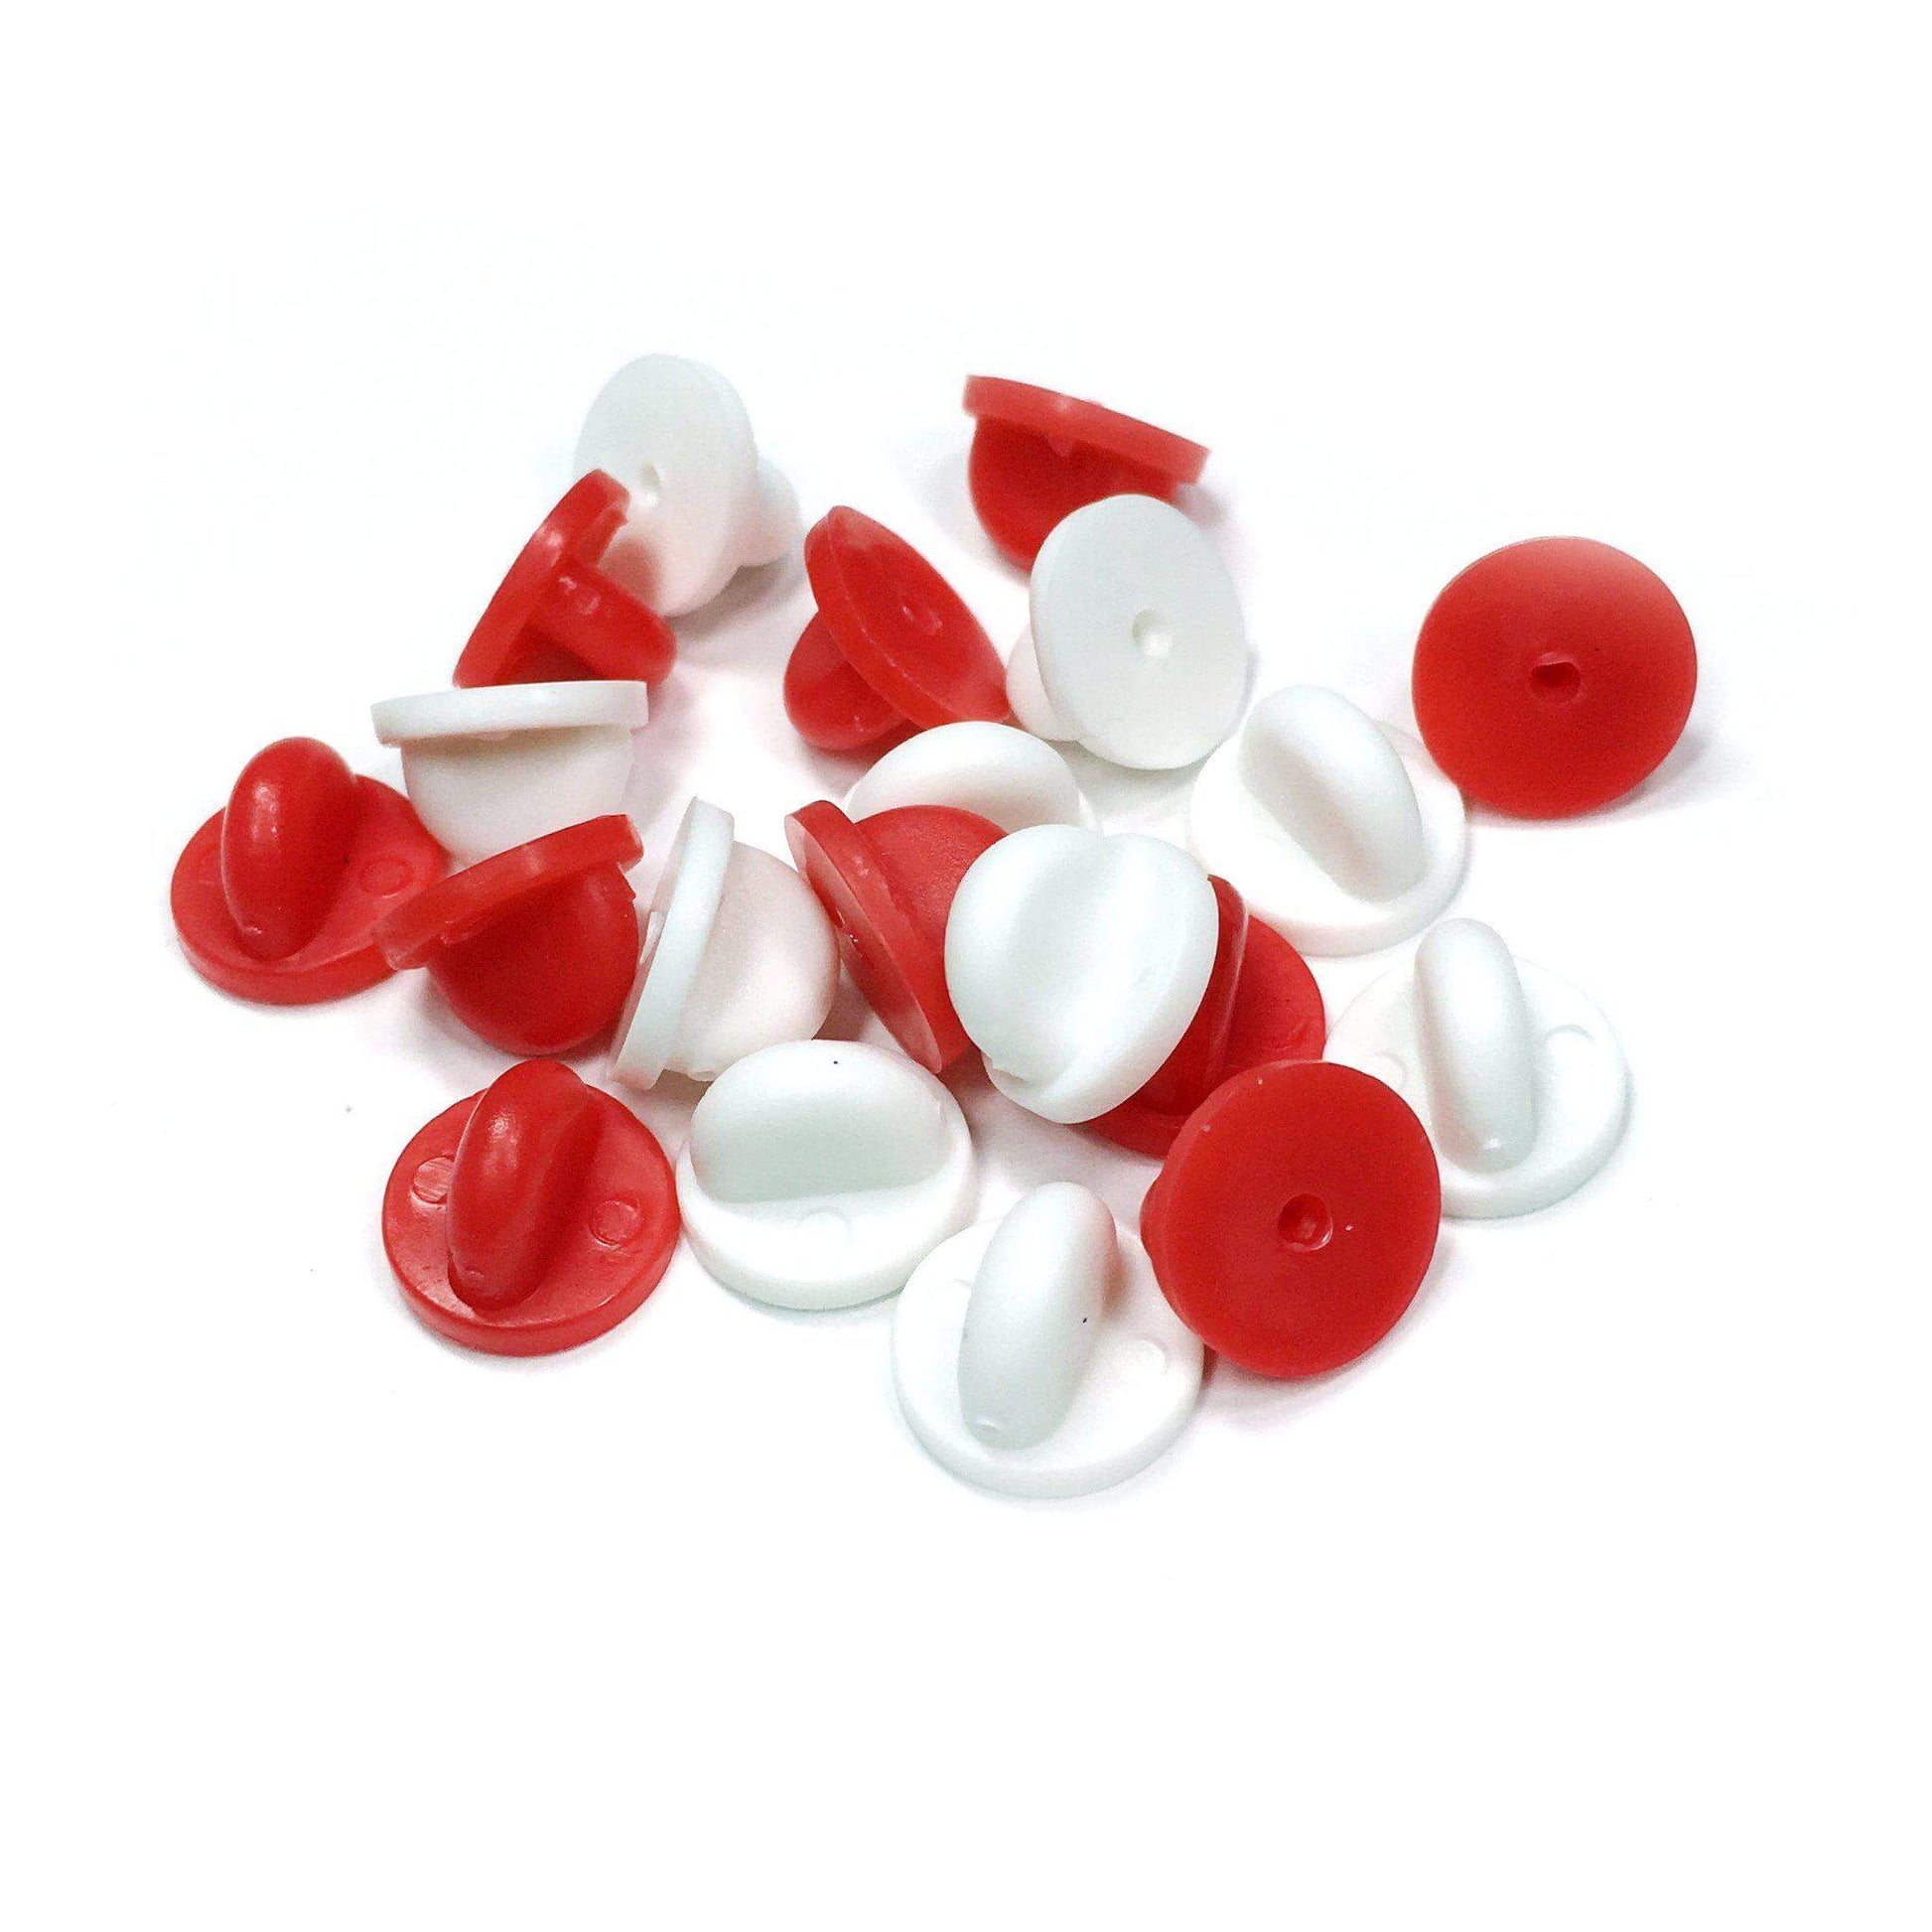 Peppermint Rubber Pin Backs - 20 Pack